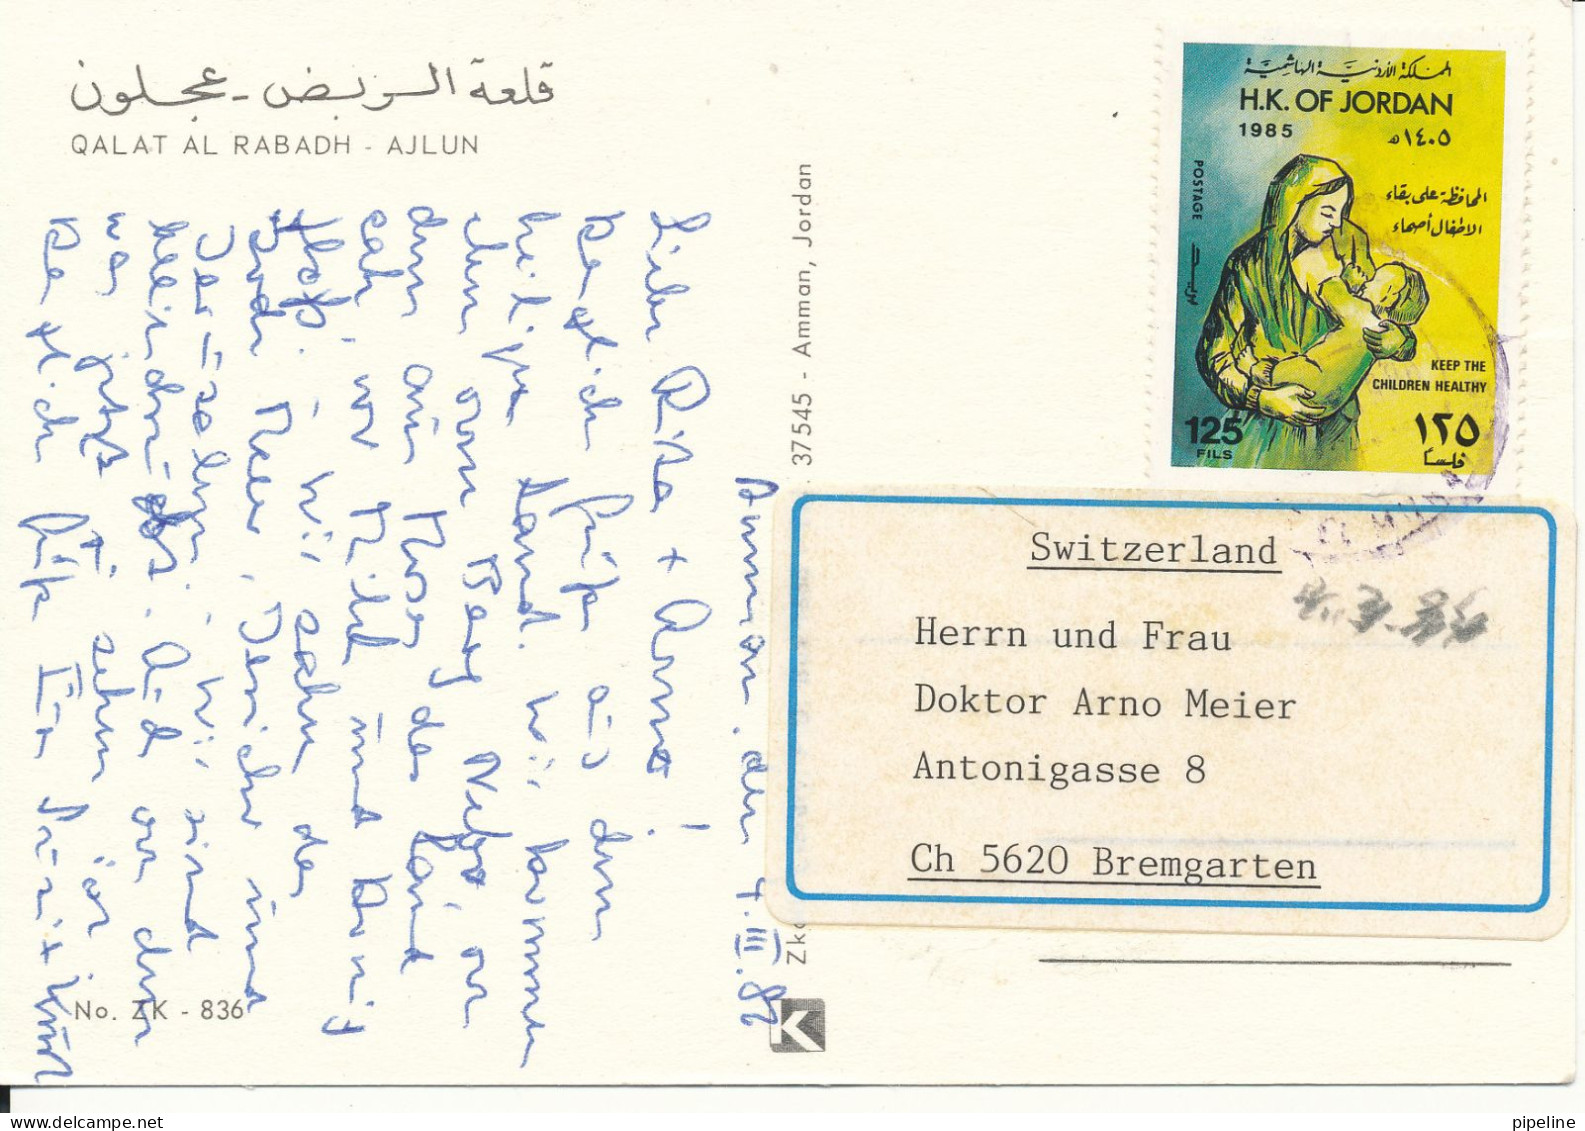 Jordan Postcard Sent To Switzerland 4-3-1986 (Qalat Al Rabadh Ajlun) - Jordanien